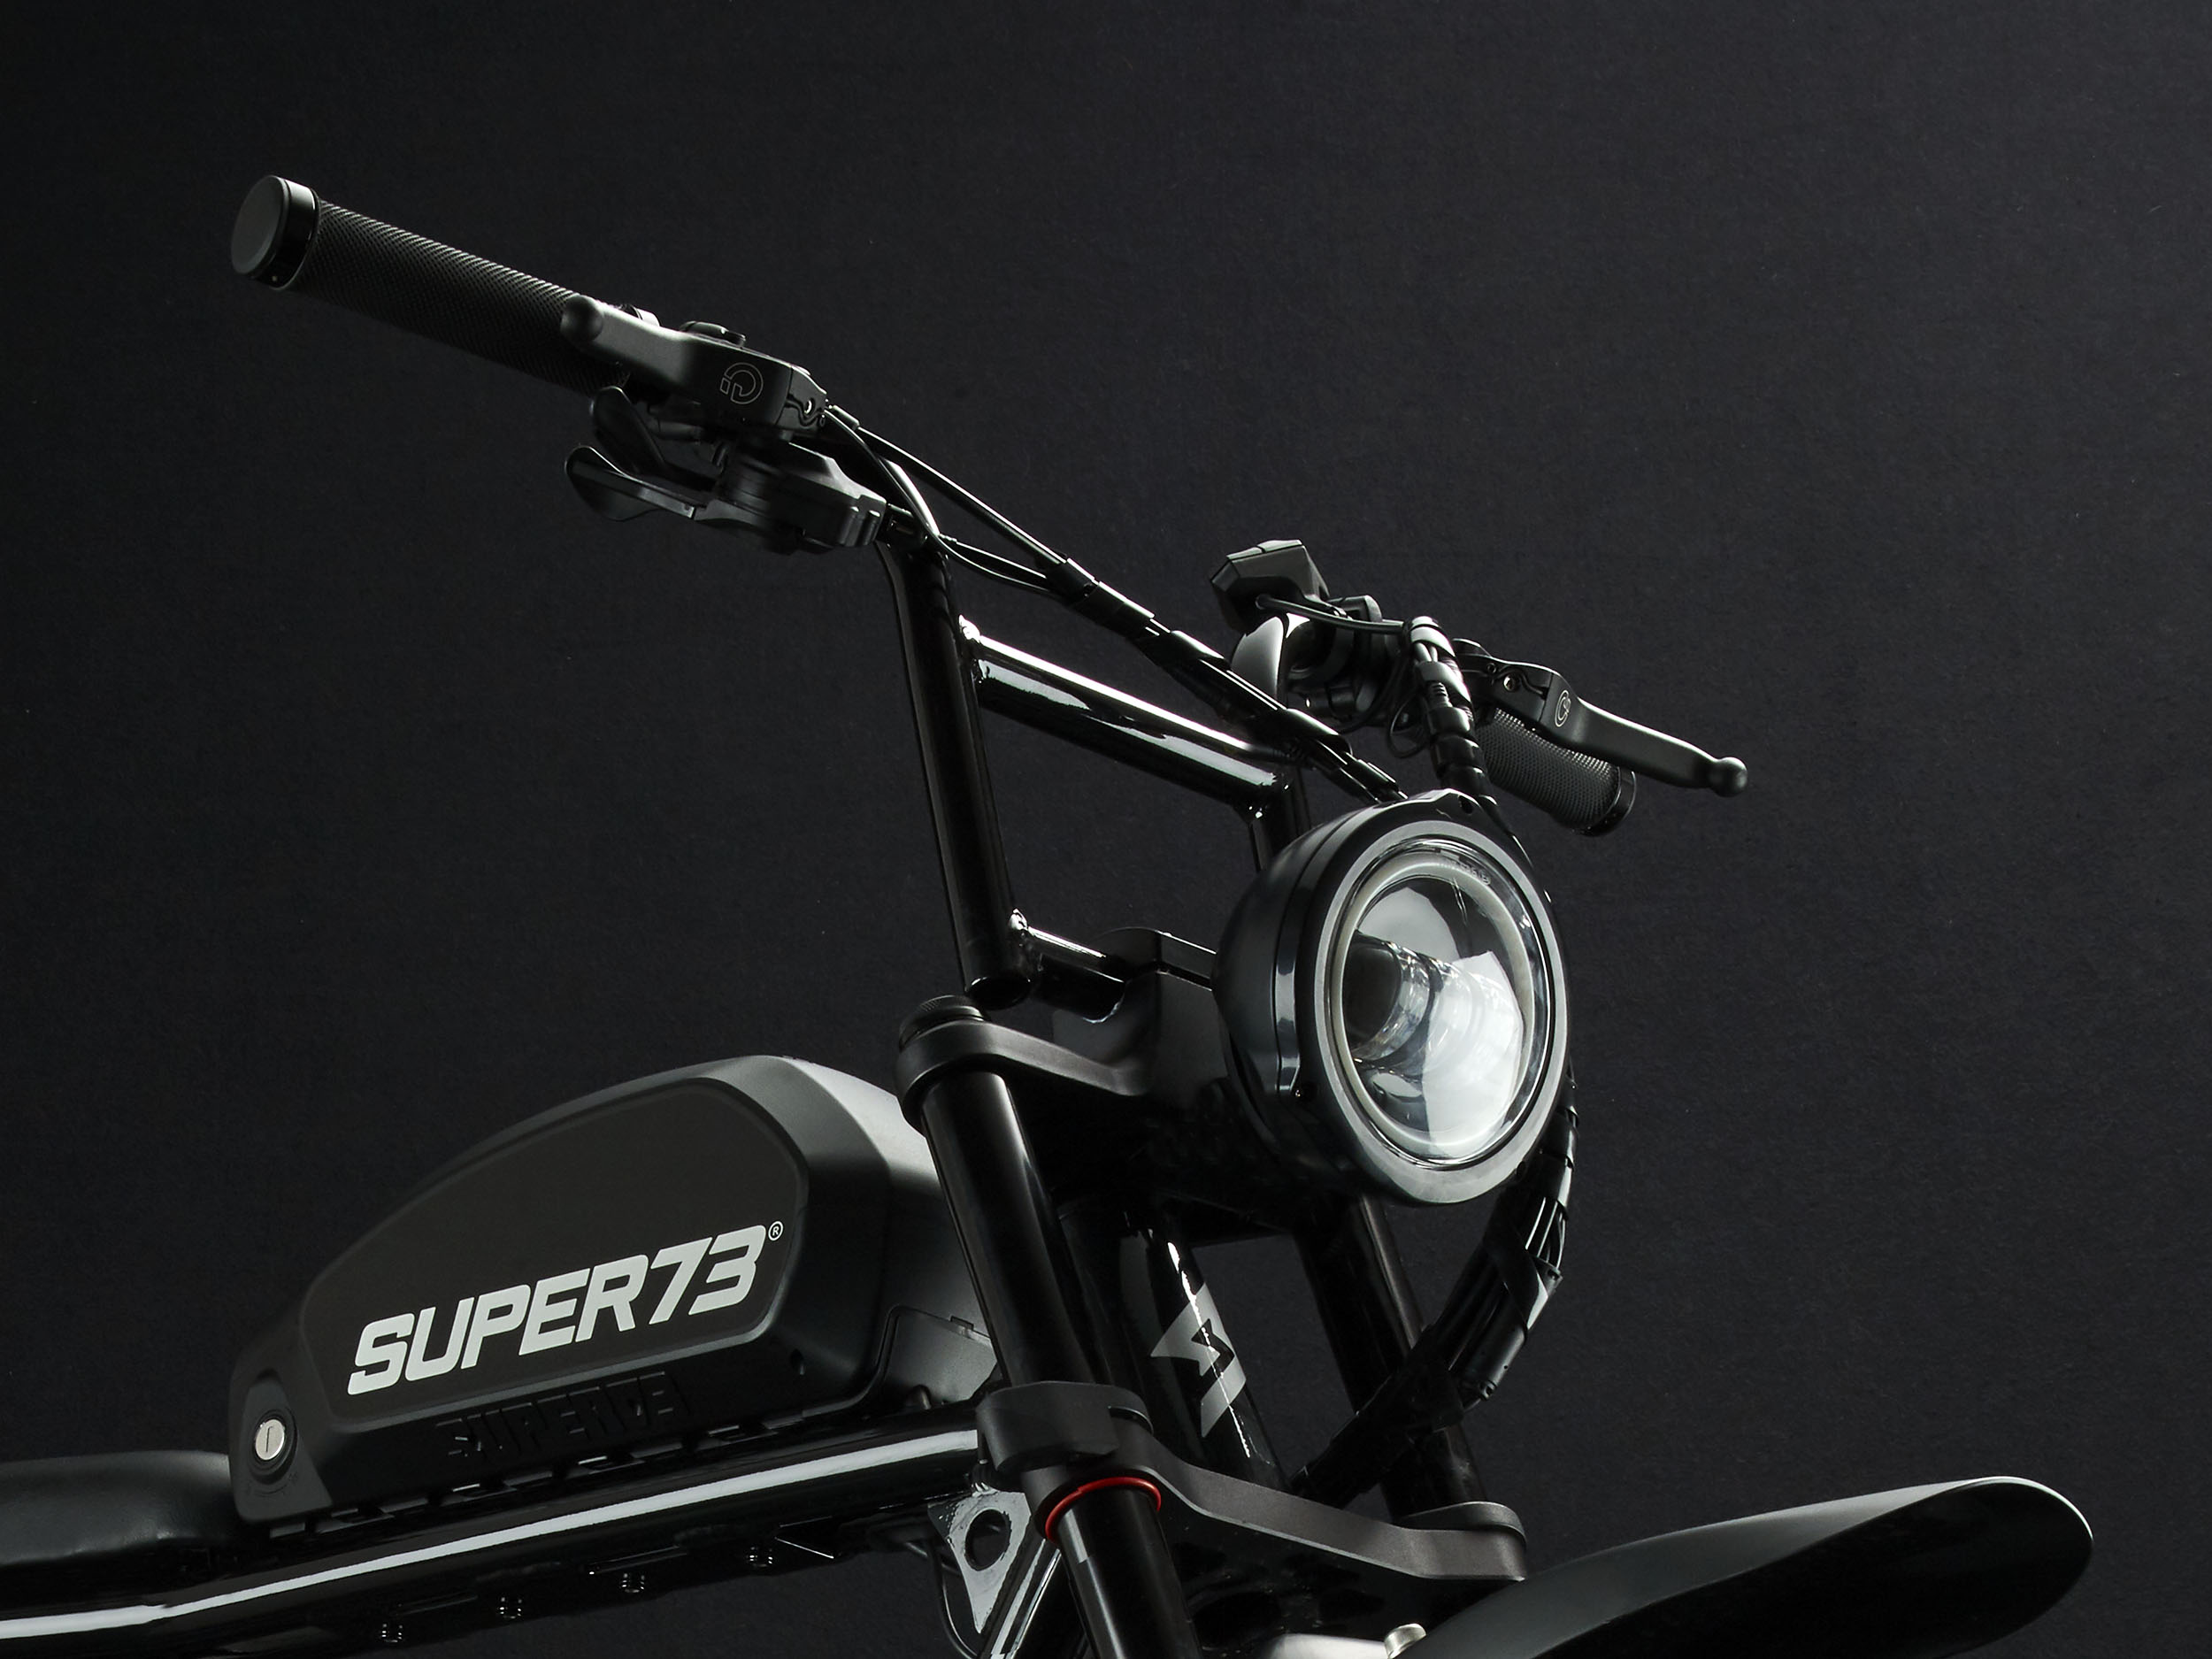 SUPER73 S2 Galaxy Black | | Super 73 e-bike を MOEVS